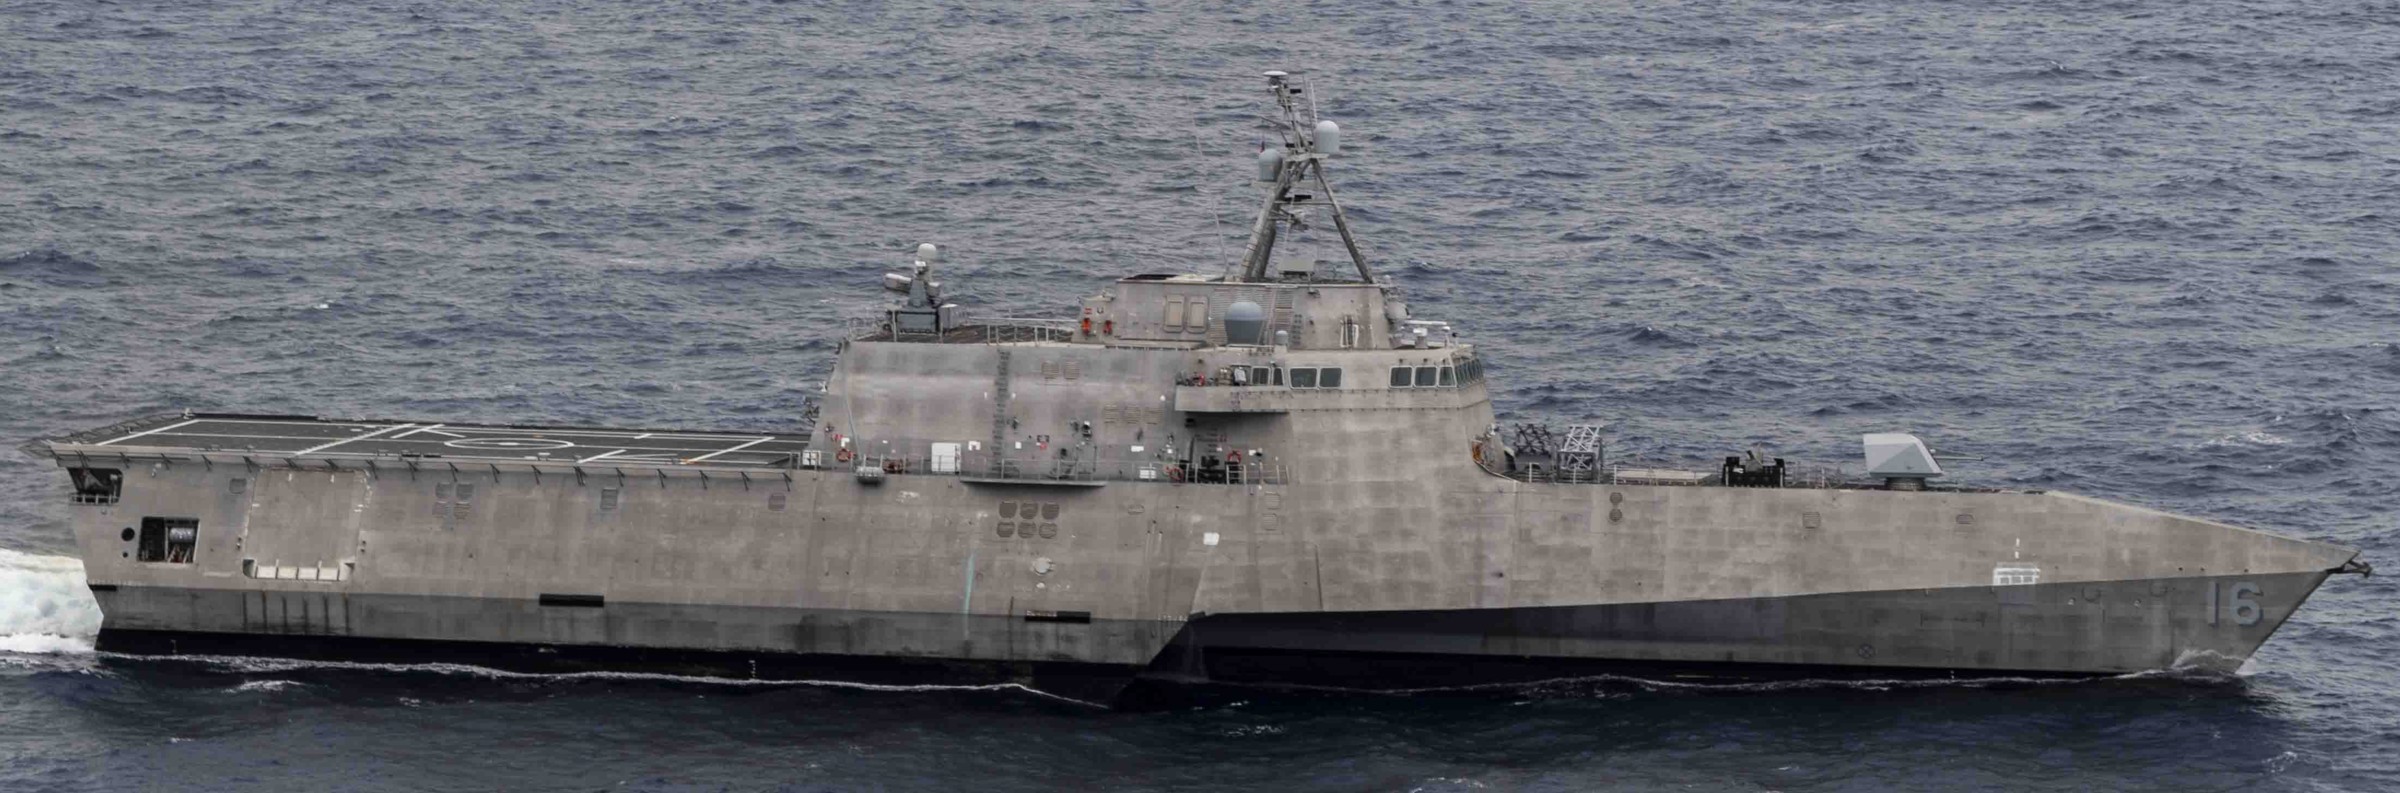 lcs-16 uss tulsa independence class littoral combat ship us navy pacific ocean 25